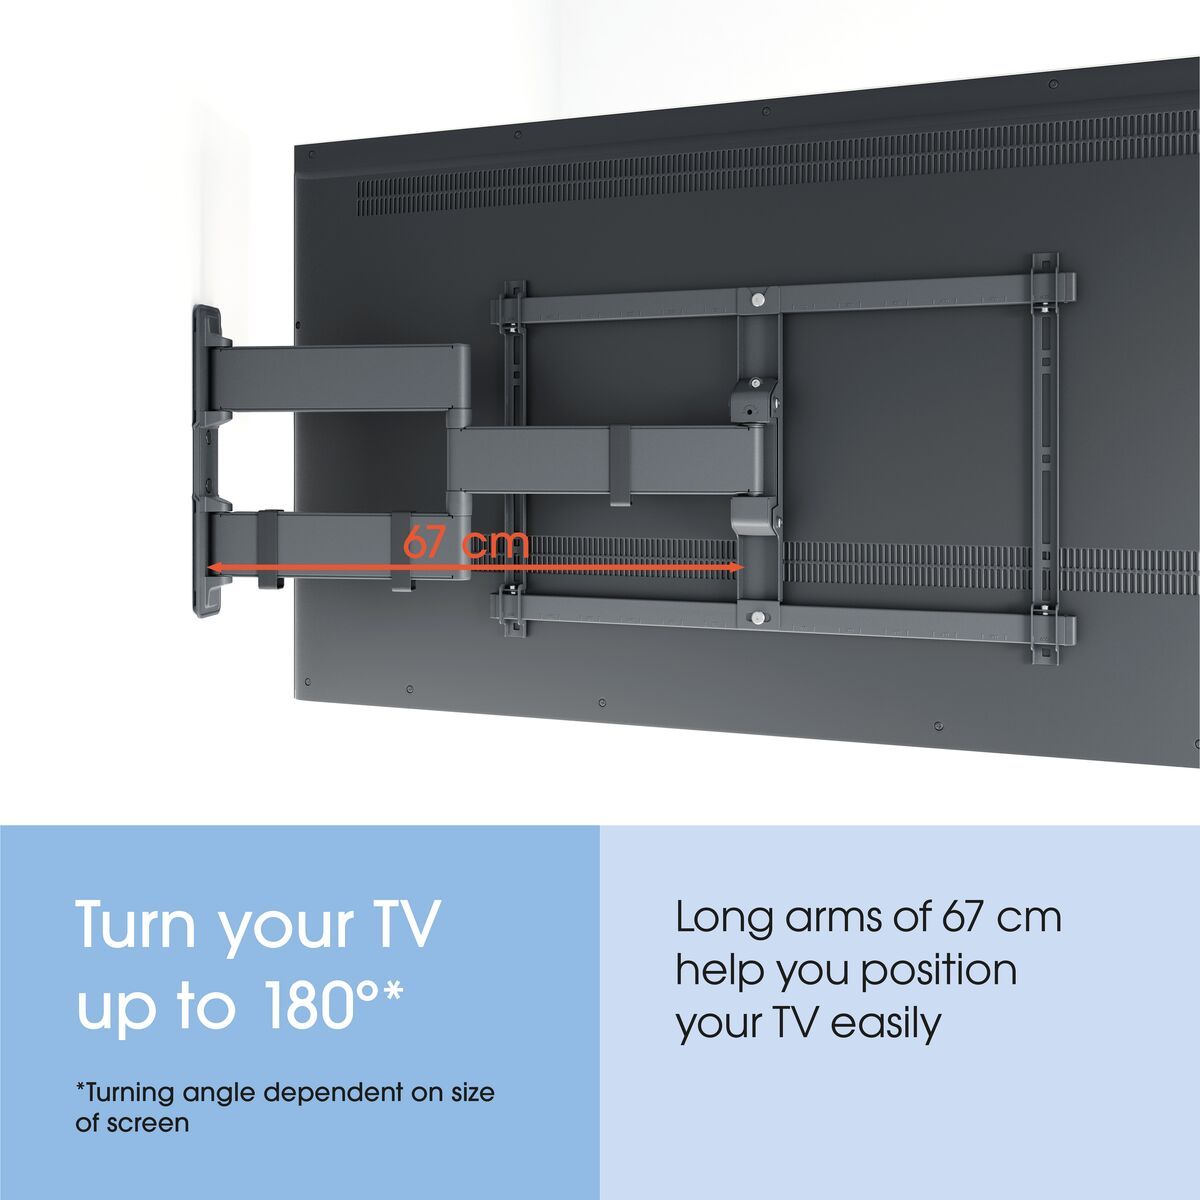 Vogel's TVM 3843 Full-Motion TV Wall Mount (black) - Suitable for 55 up to 100 inch TVs - Full motion (up to 180°) swivel - Tilt up to 10° - USP